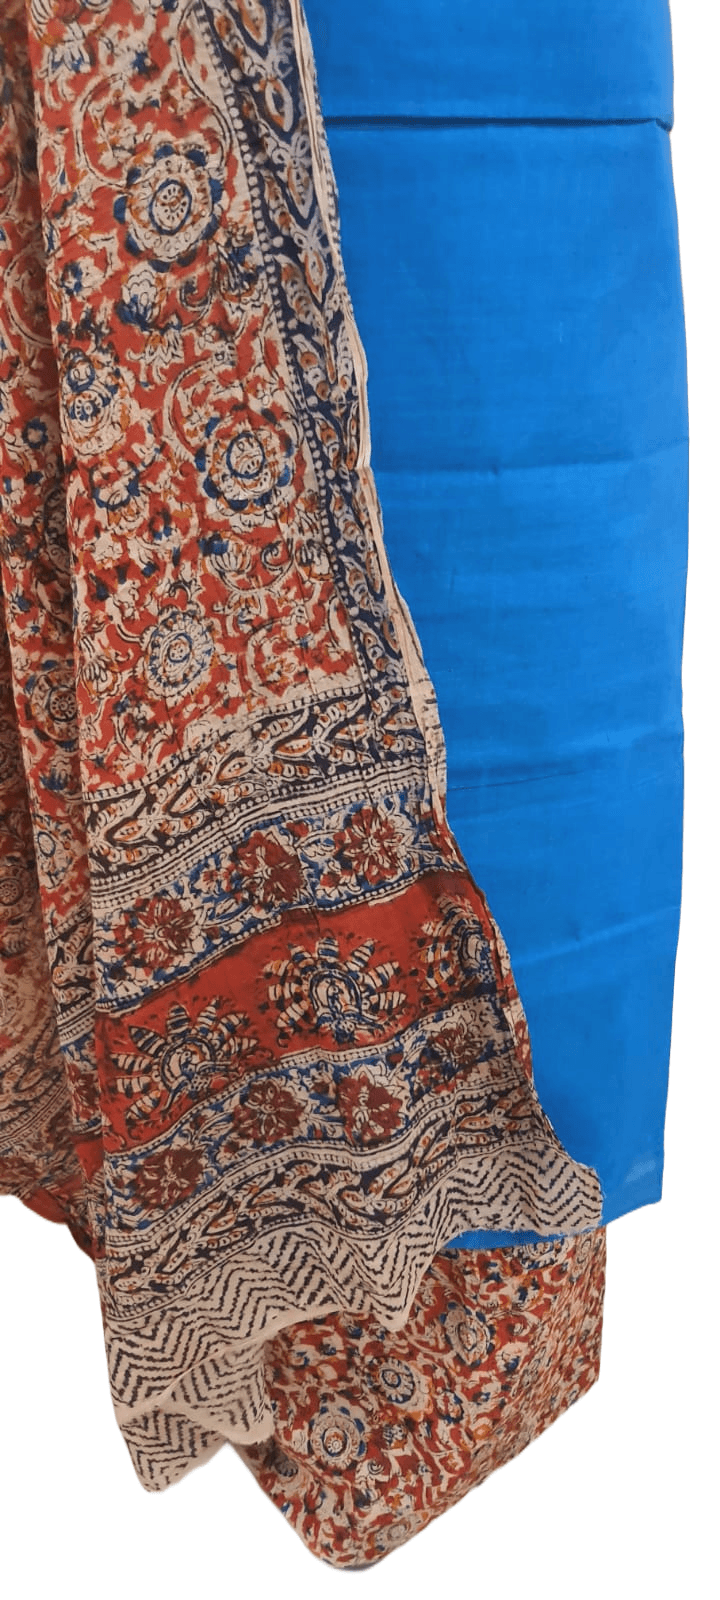 Blue Kalamkari Salwar Kameez Dress Material - Ethnic's By Anvi Creations